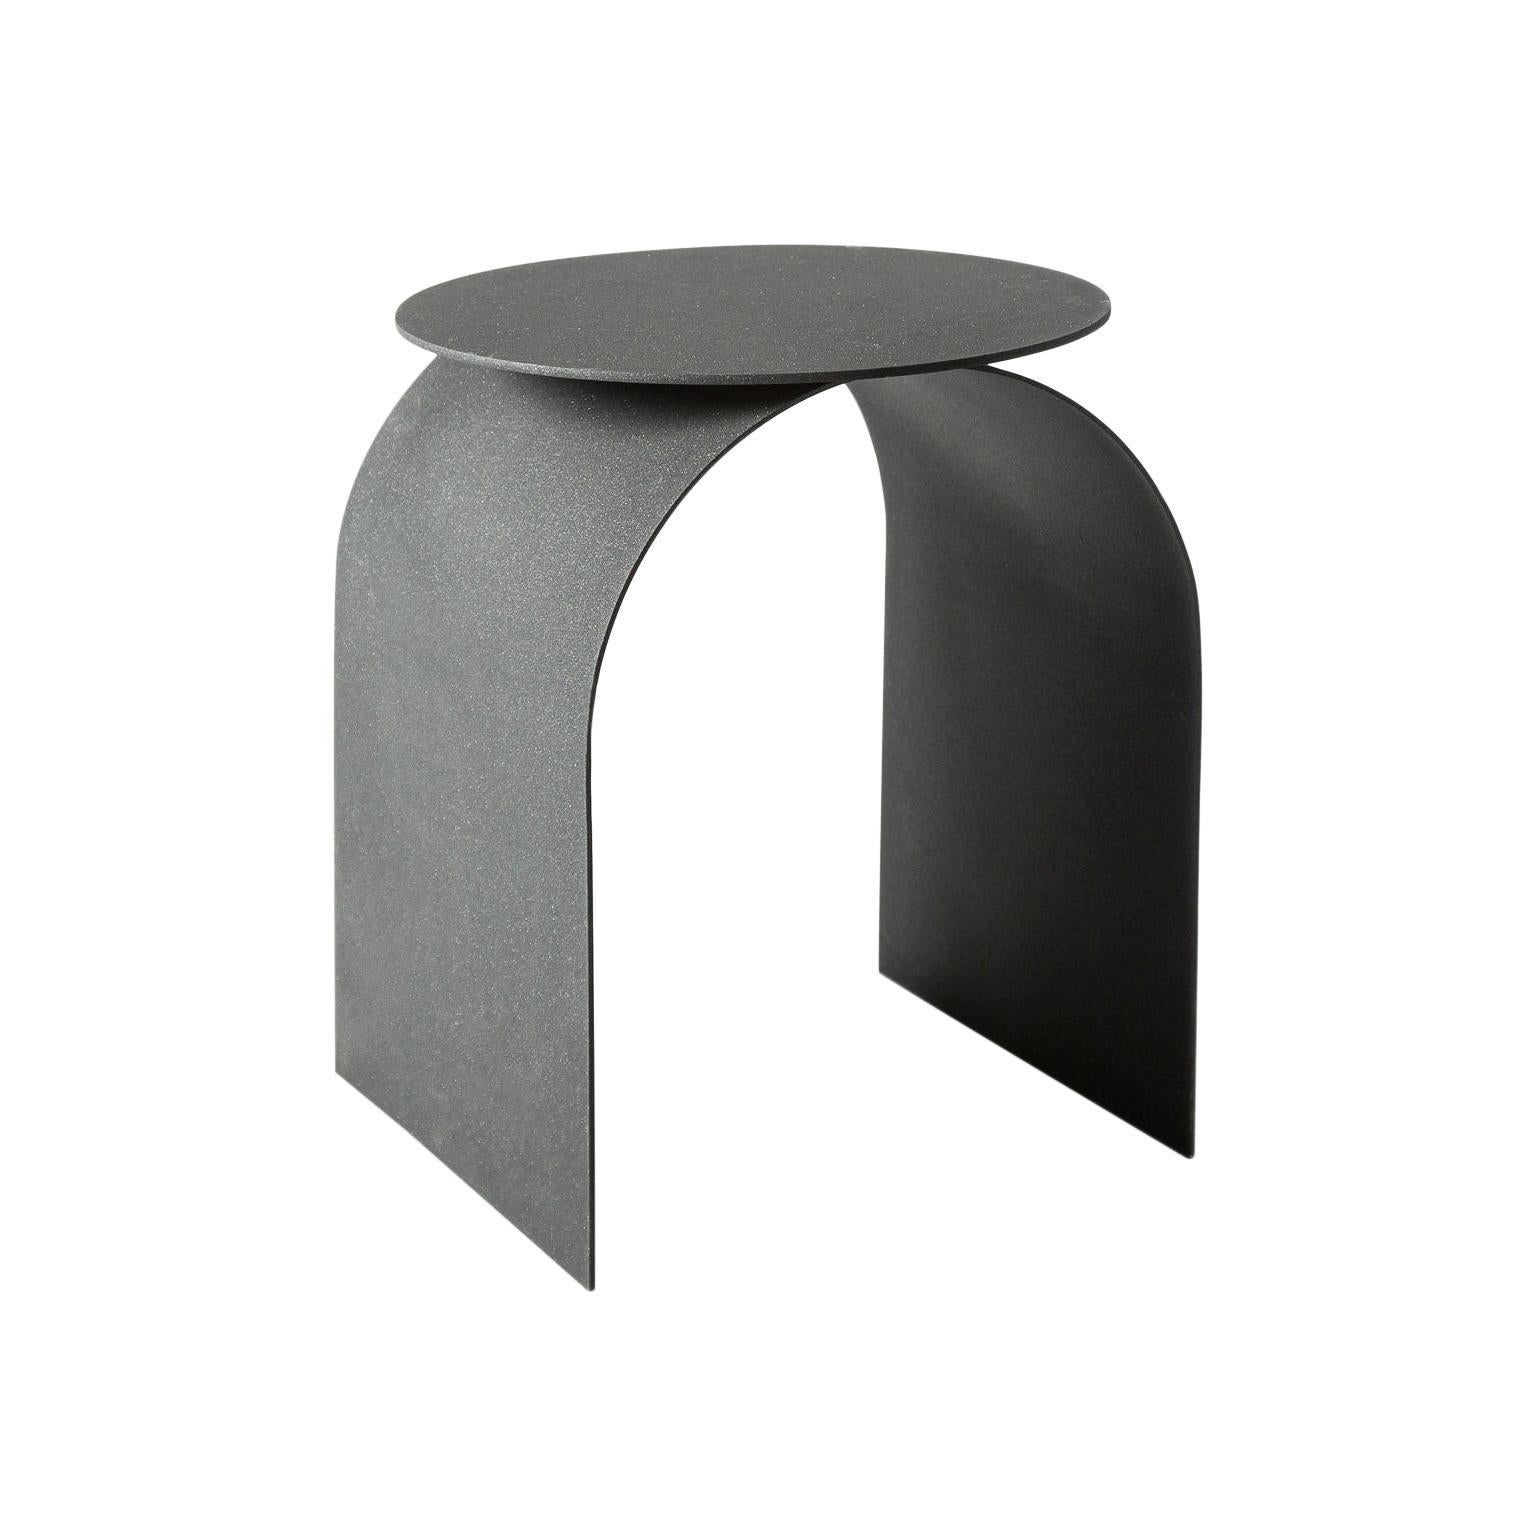 Spinzi Table d'appoint sculpturale Palladium, métal noir, design italien de collection